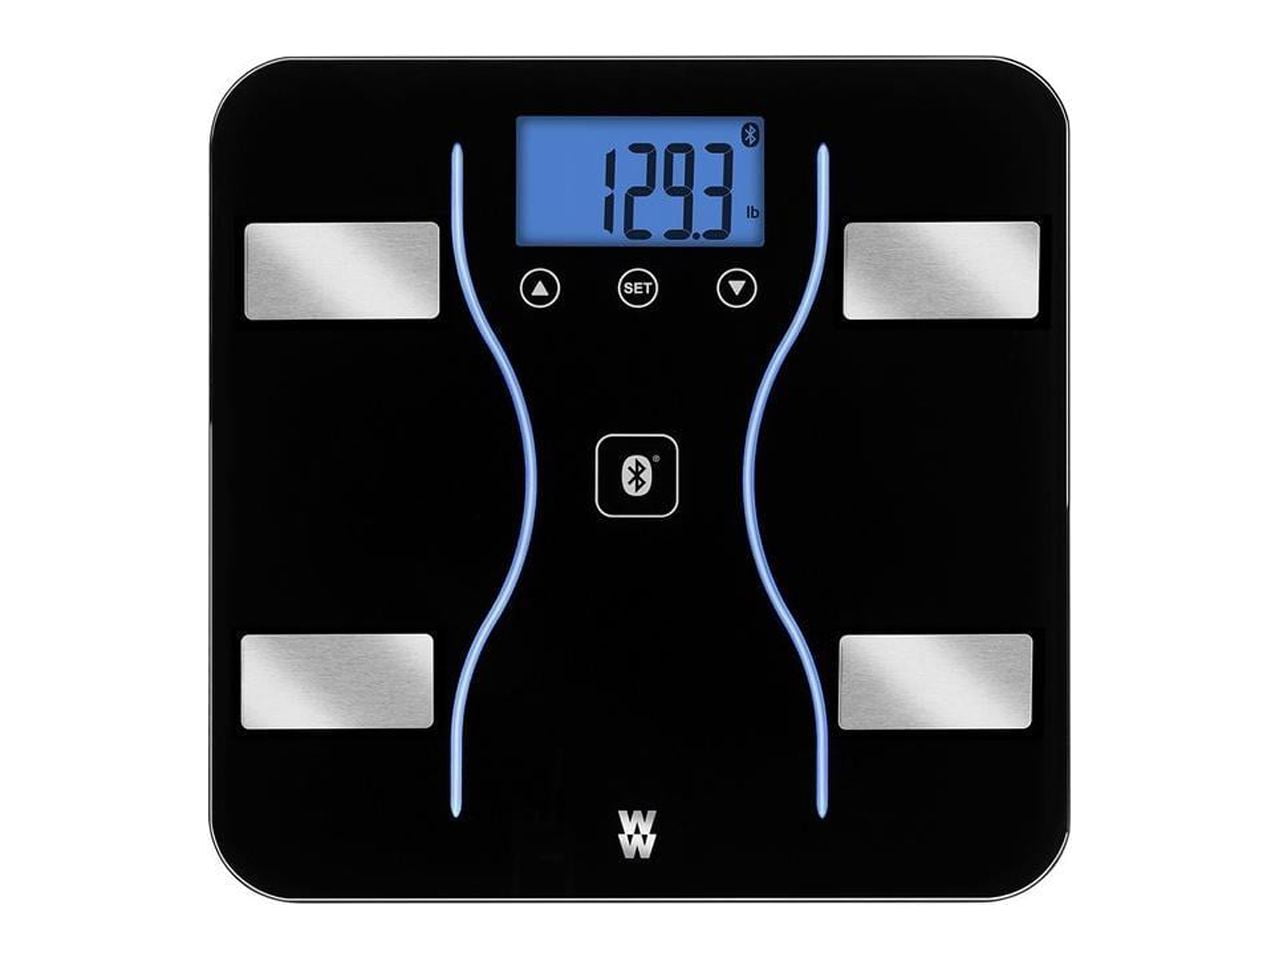 Conair Bluetooth Body Analysis Bathroom Scale with 400lb Capacity - Black 